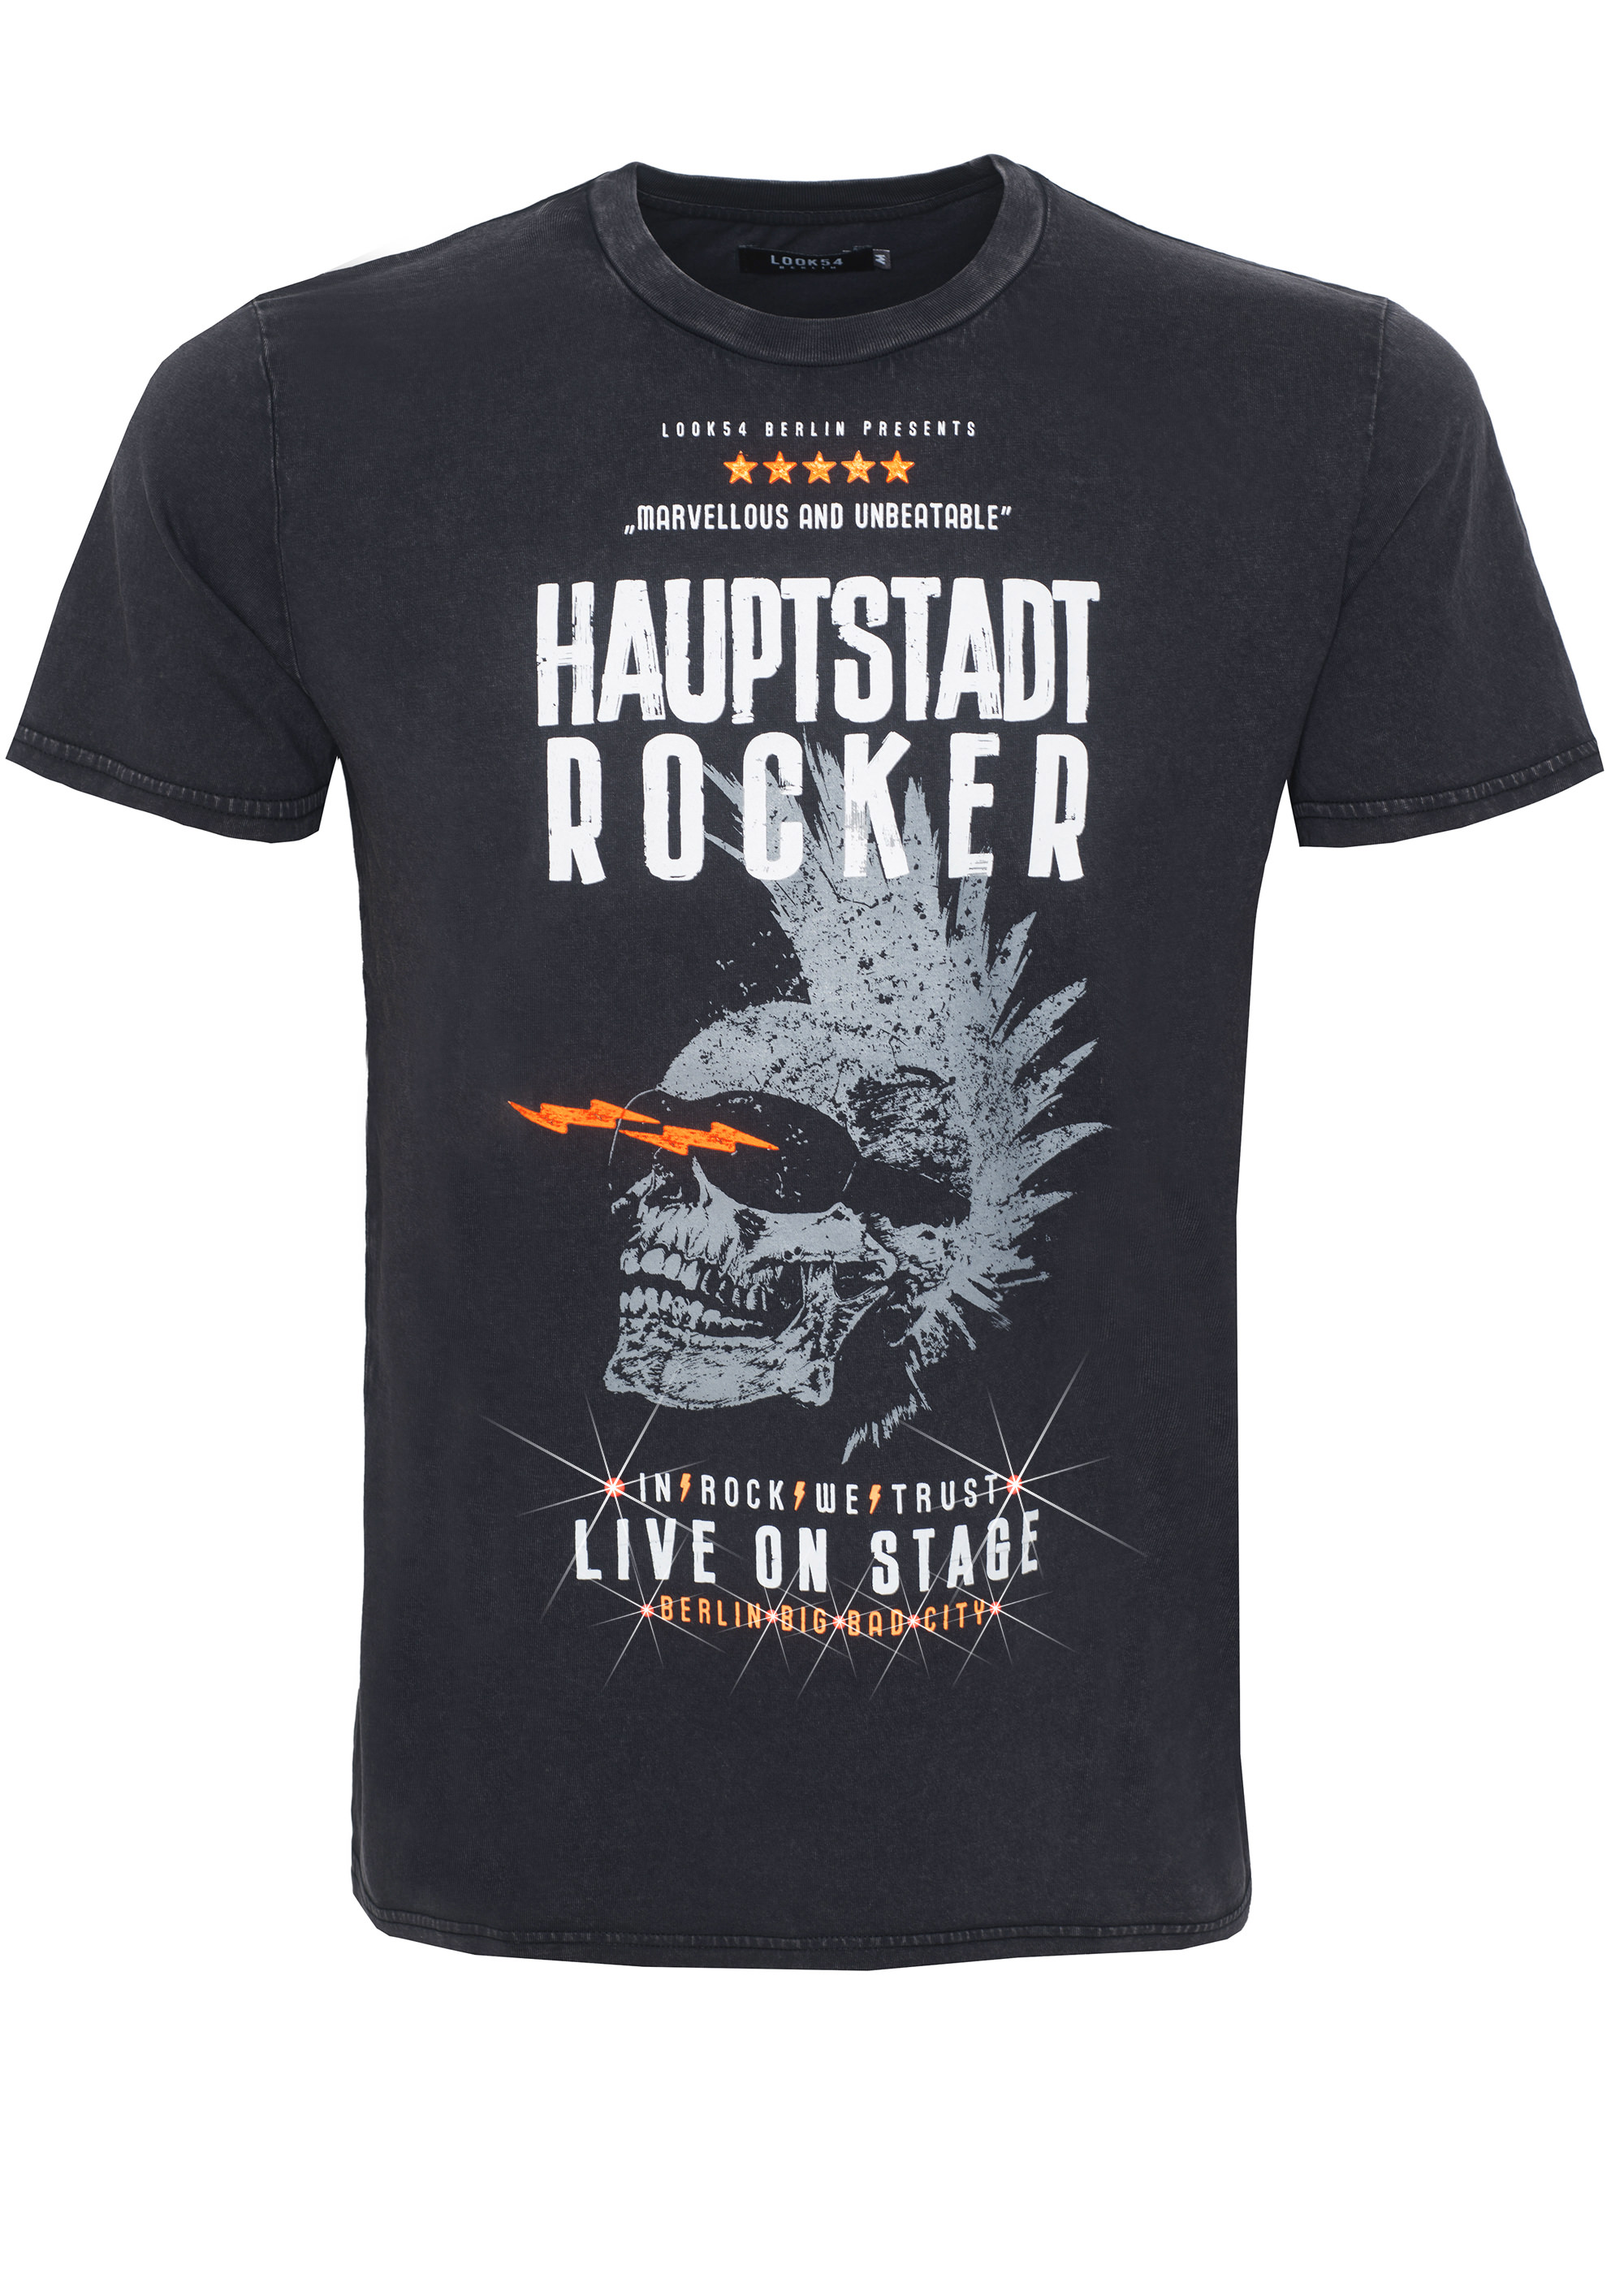 HAUPTSTADTROCKER Live on Stage T-Shirt